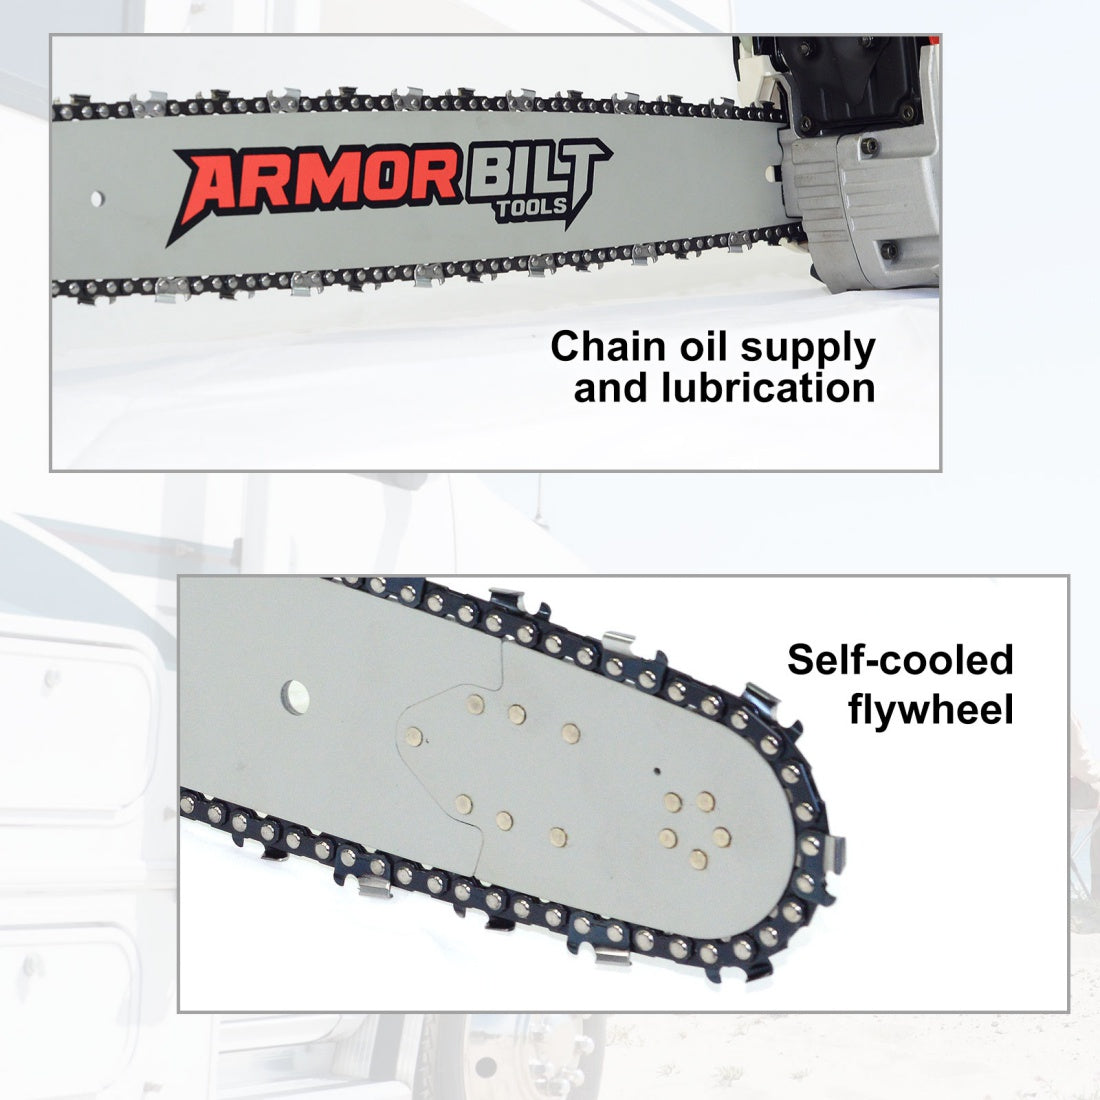 ArmorBilt 75cc Petrol Commercial Chainsaw 20" Bar E-Start Pruning Chain Saw